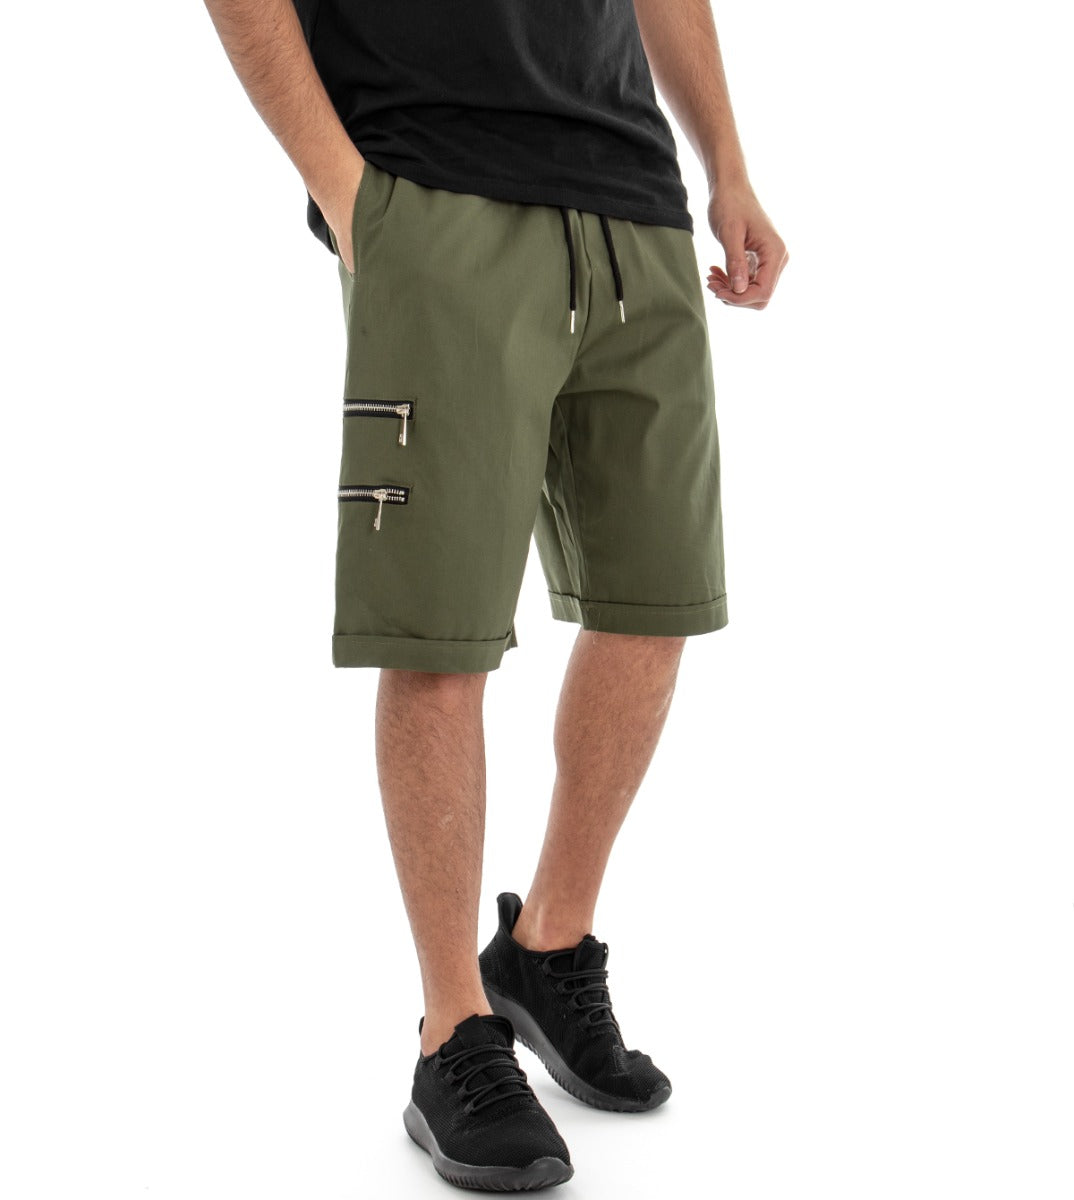 Bermuda Short Men's Shorts Green Elastic GIOSAL-PC1355A